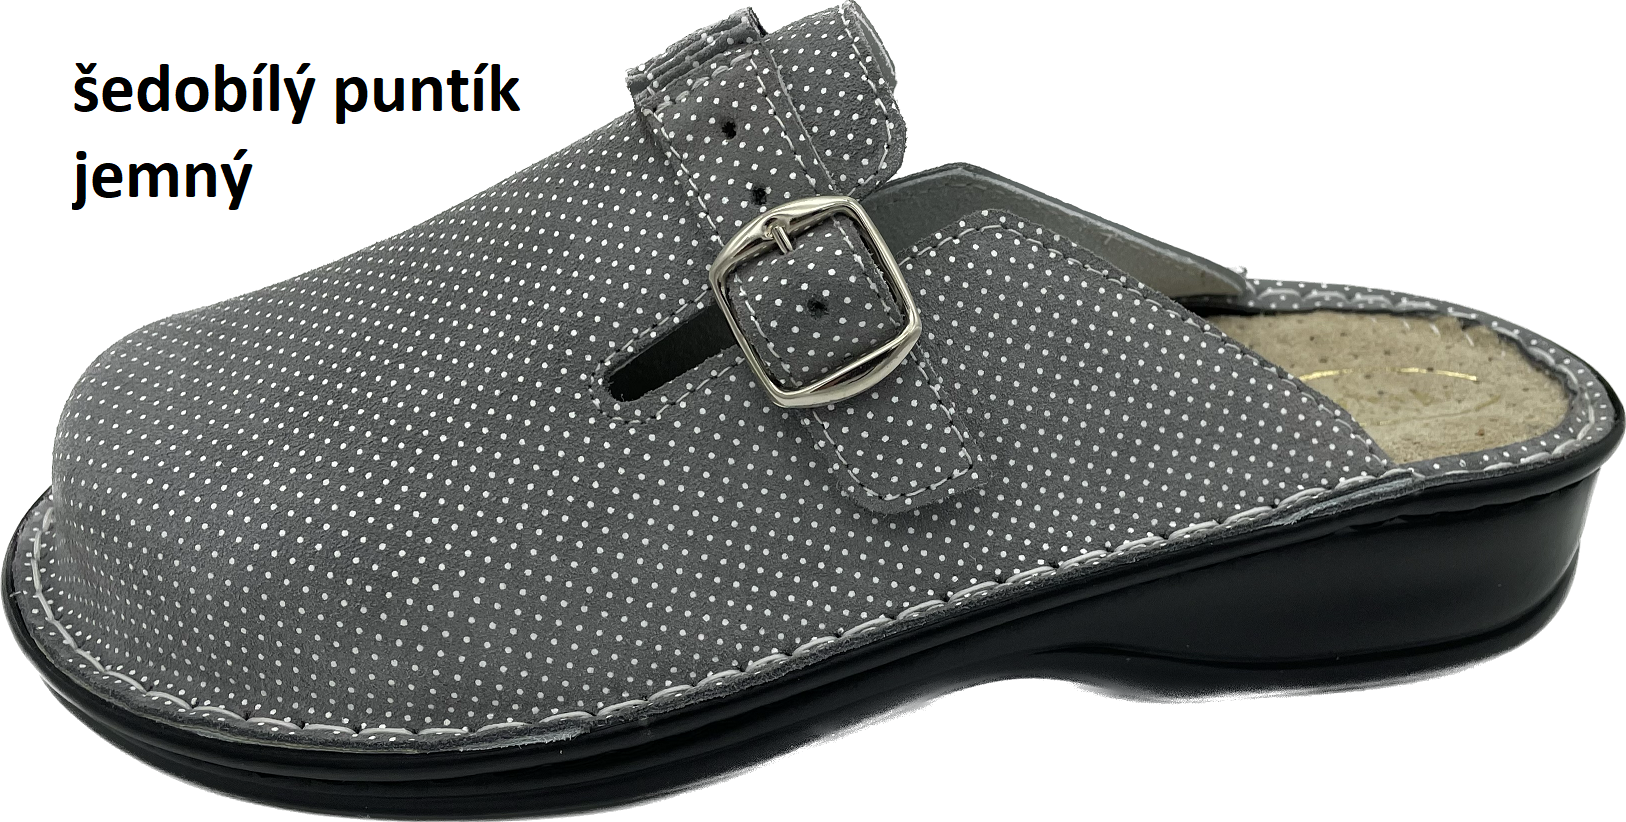 Boty Hanák vzor 308 - černá podešev Barva usně: šedobílý puntík jemný hladká, Velikosti obuvi: 41